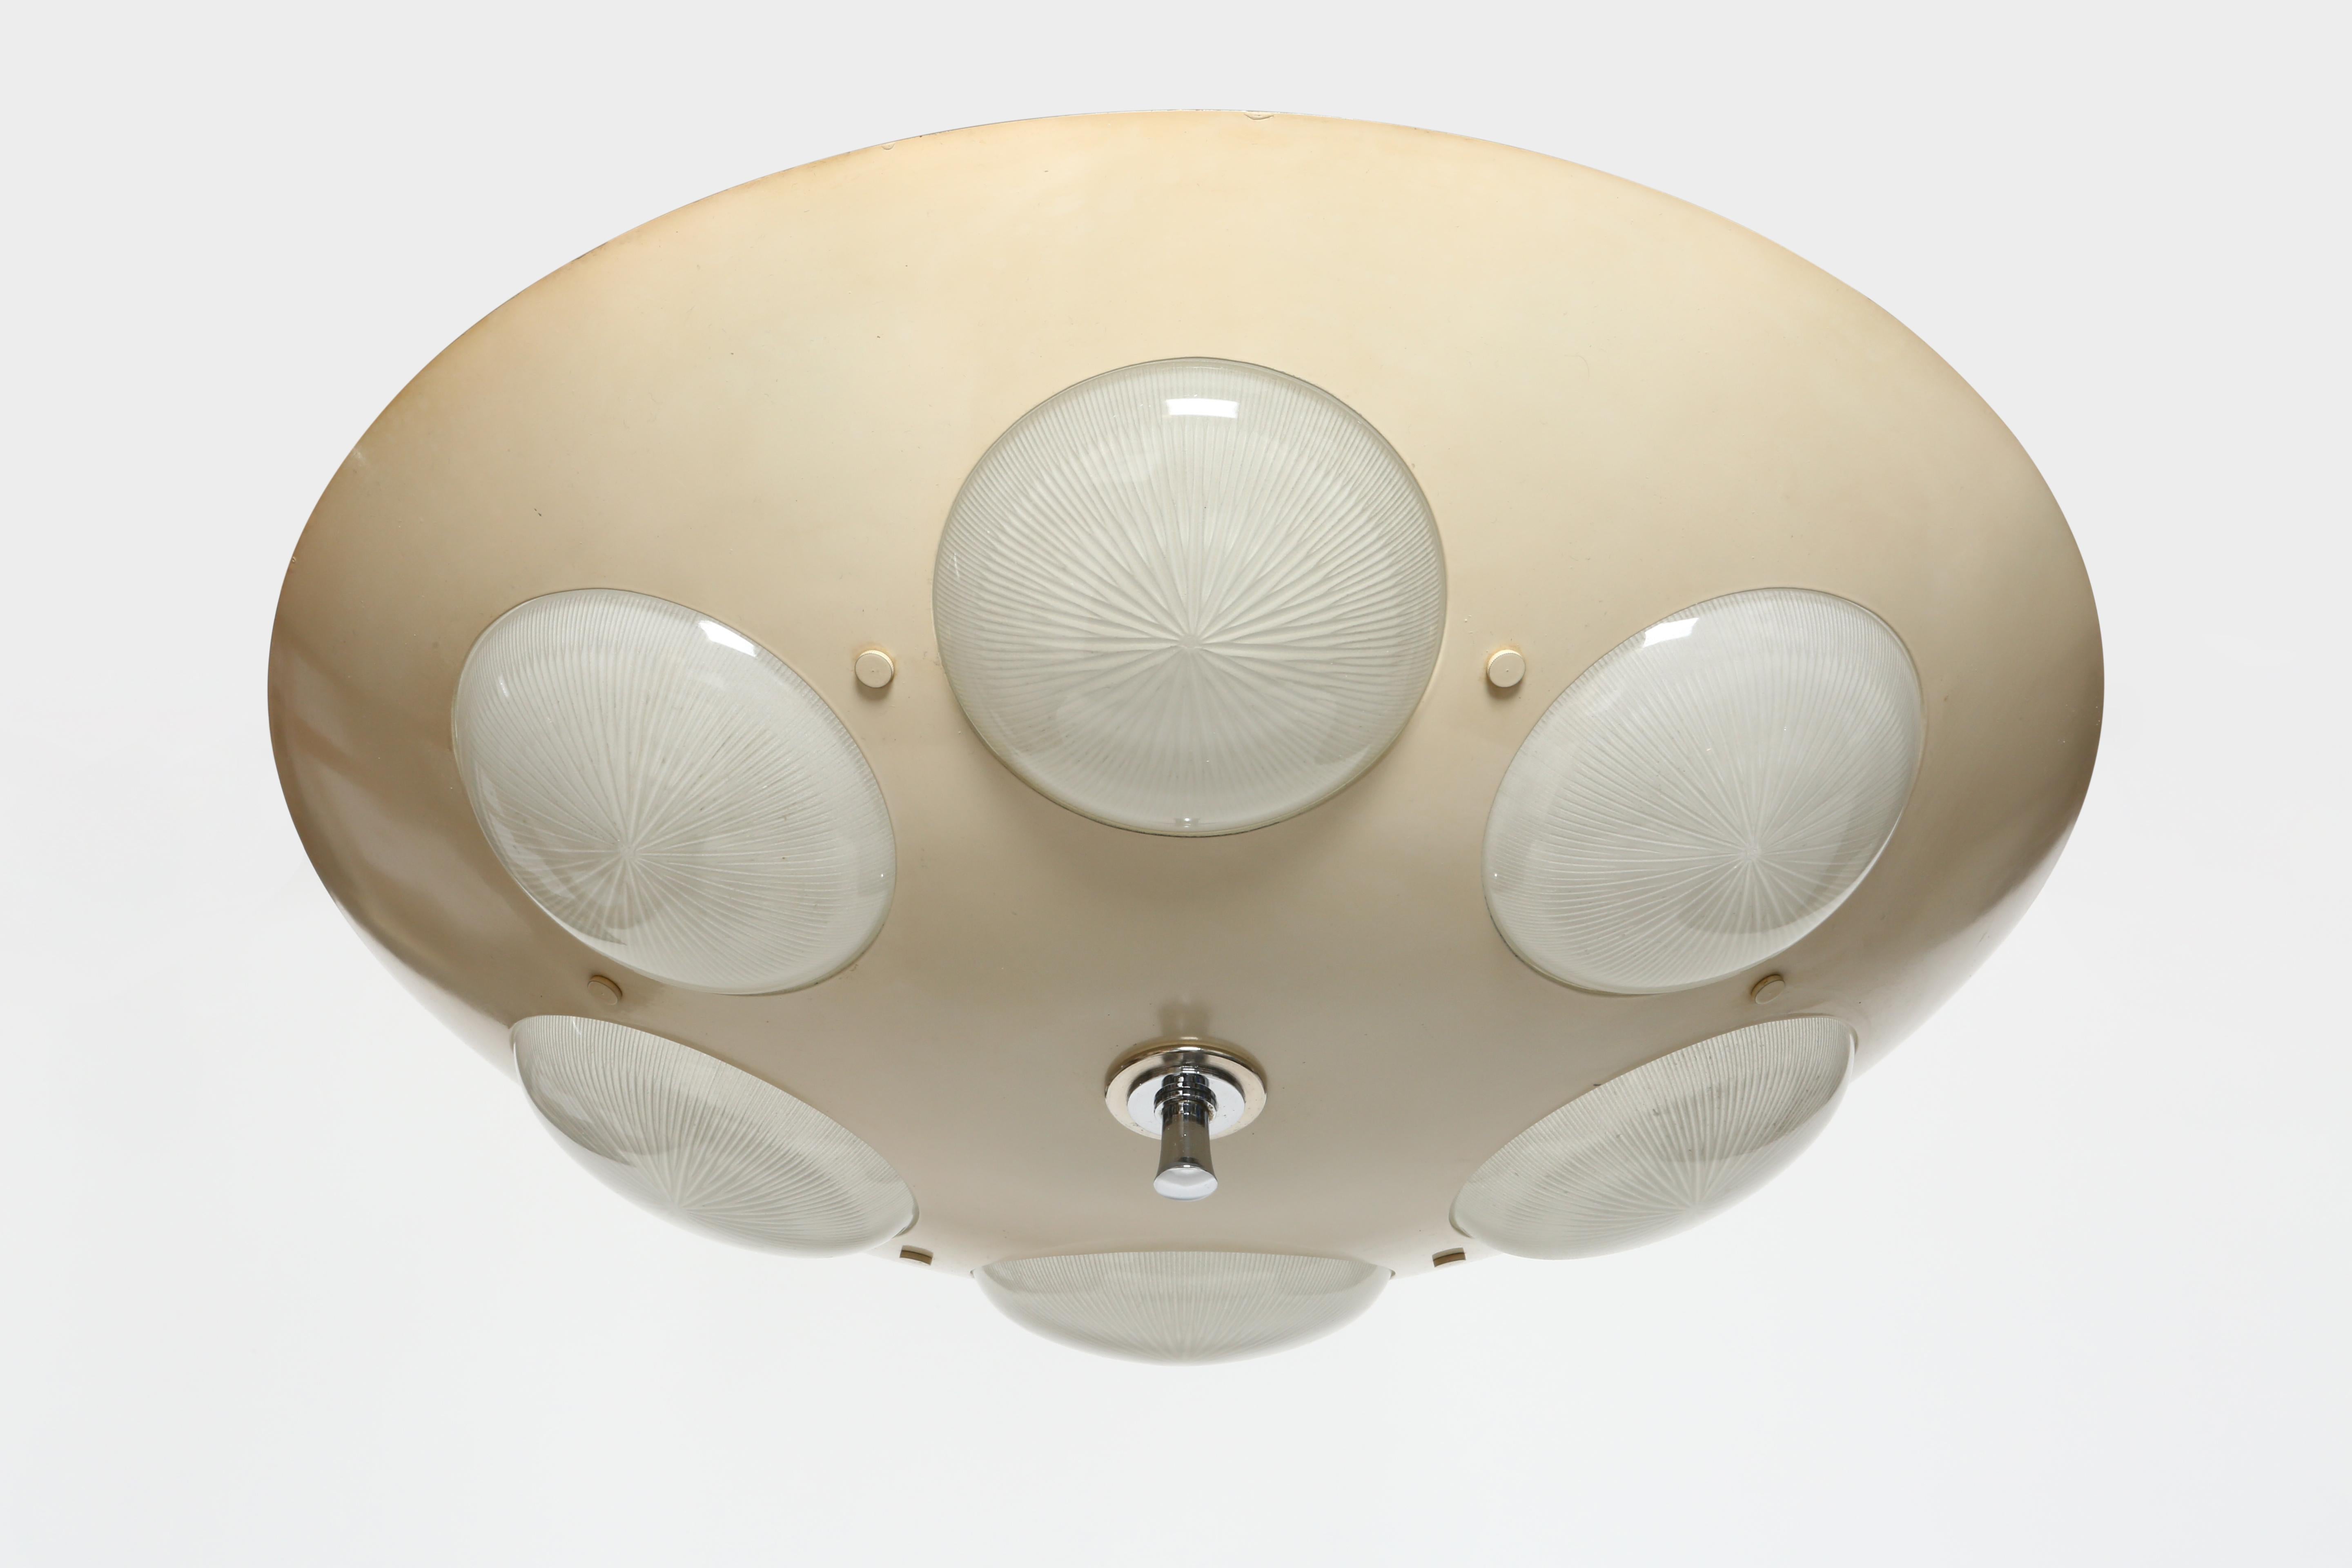 Enameled Oscar Torlasco for Lumi attributed ceiling suspension